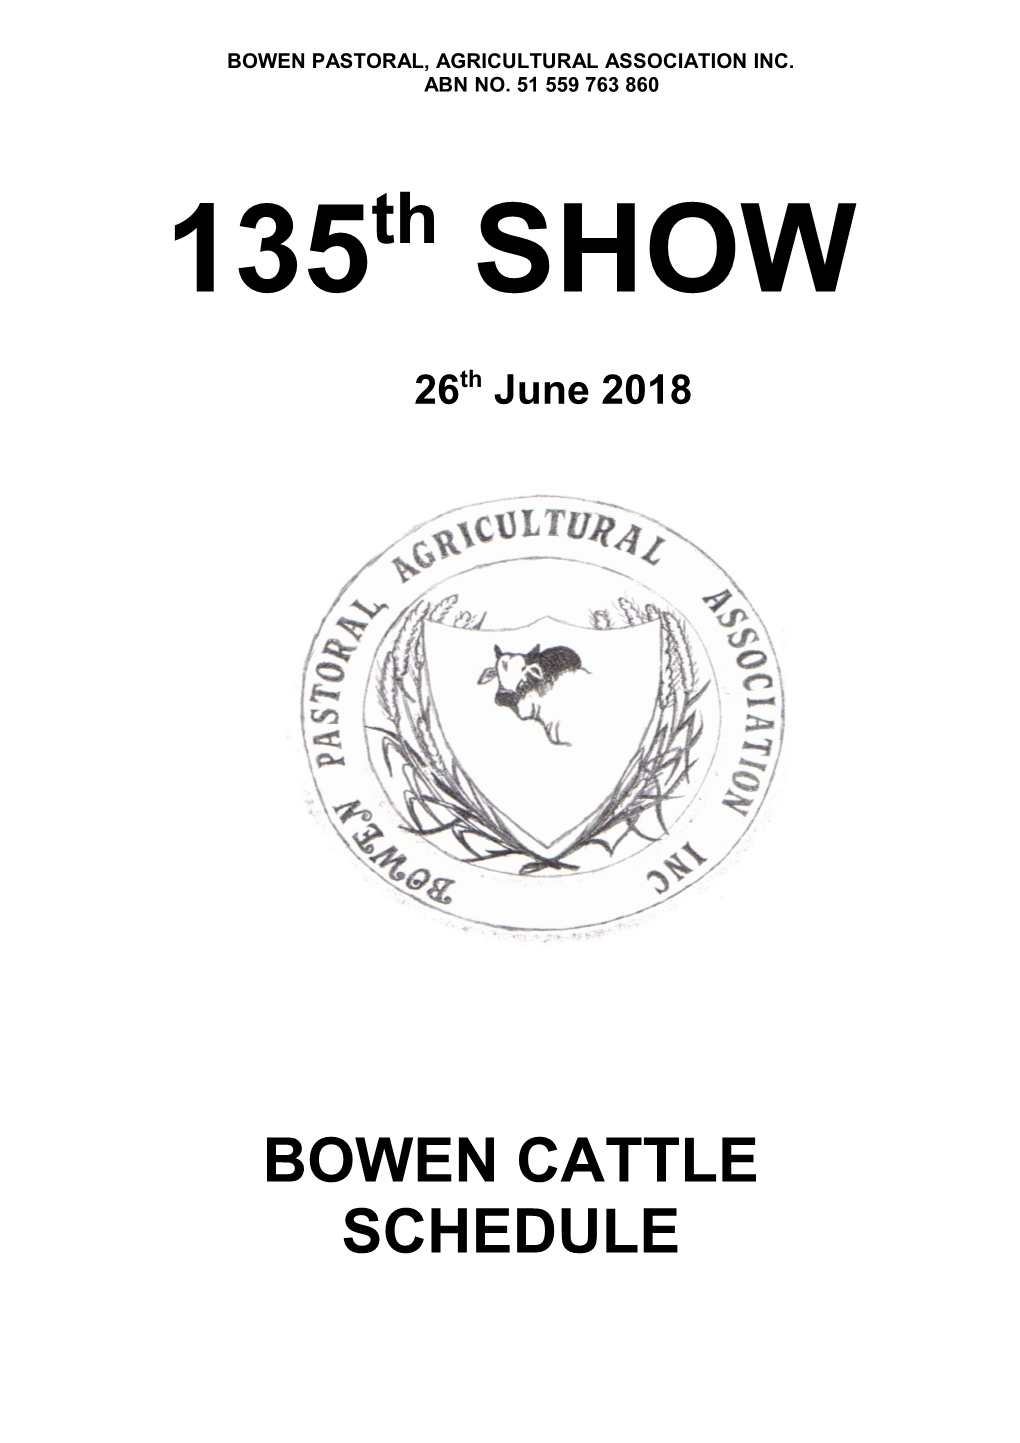 Bowen Pastoral, Agricultural Association Inc